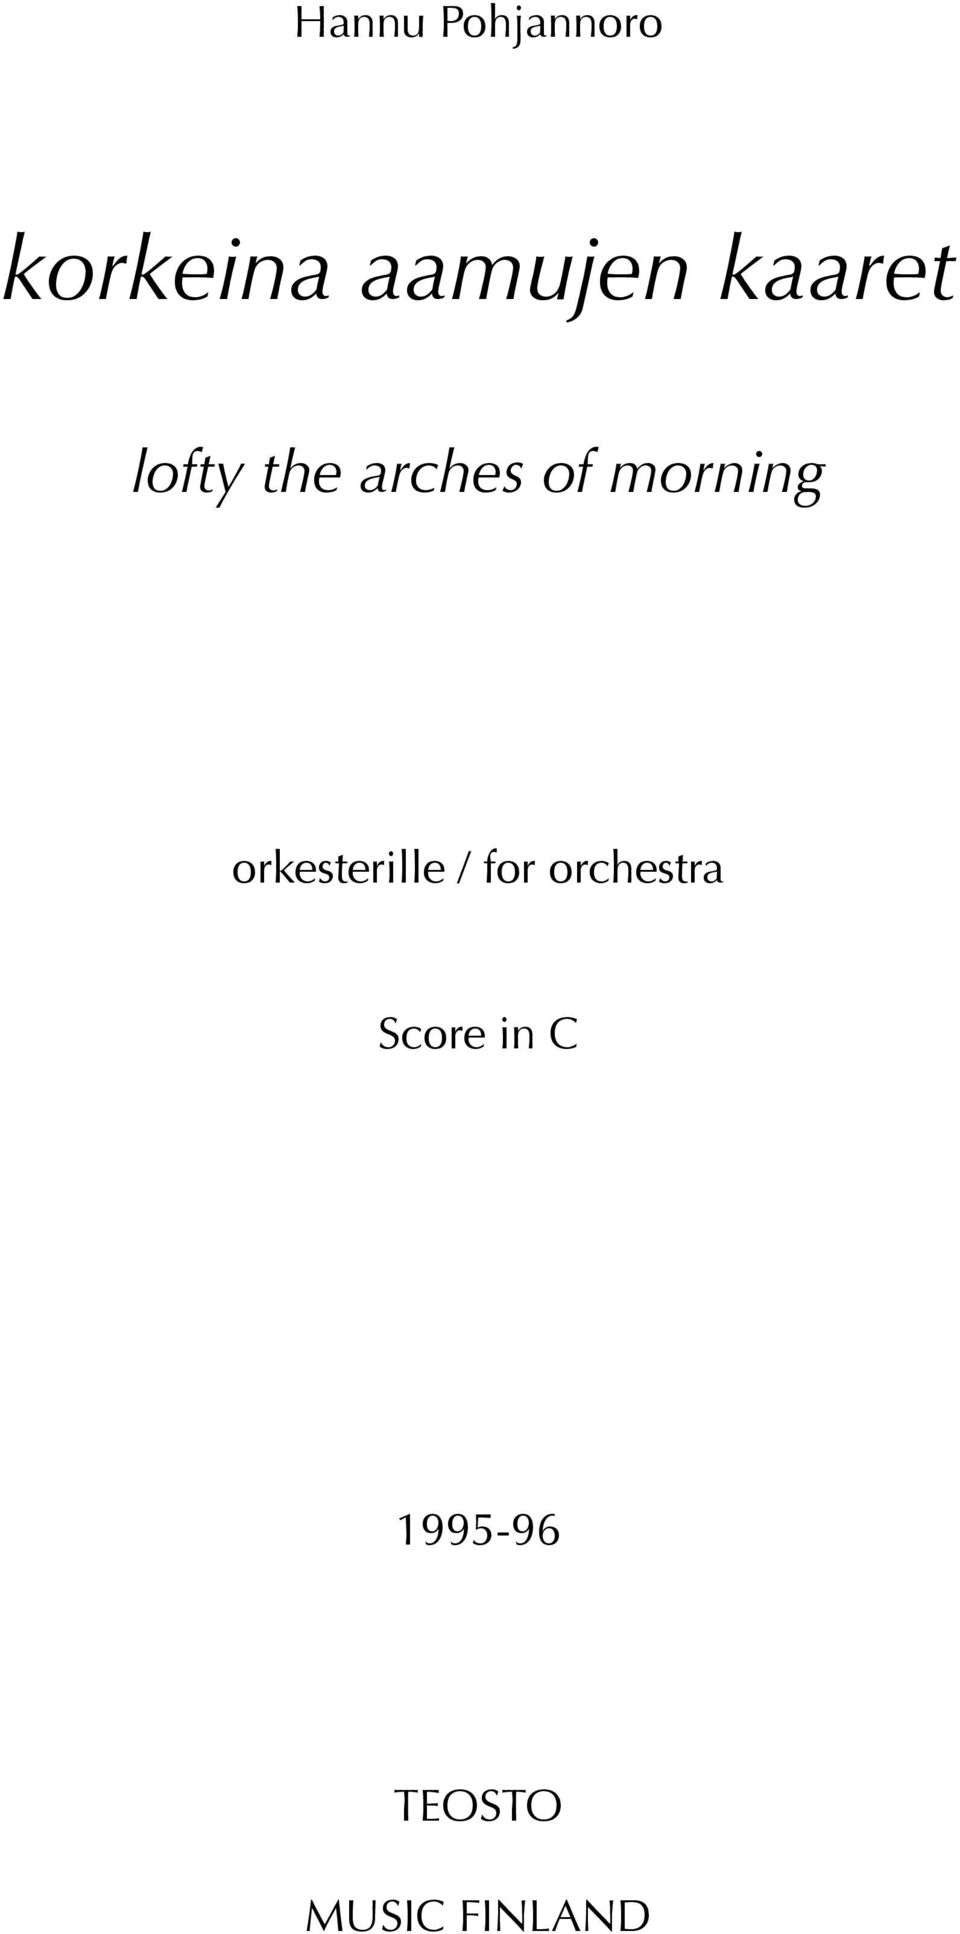 orkeserille / or orchesra